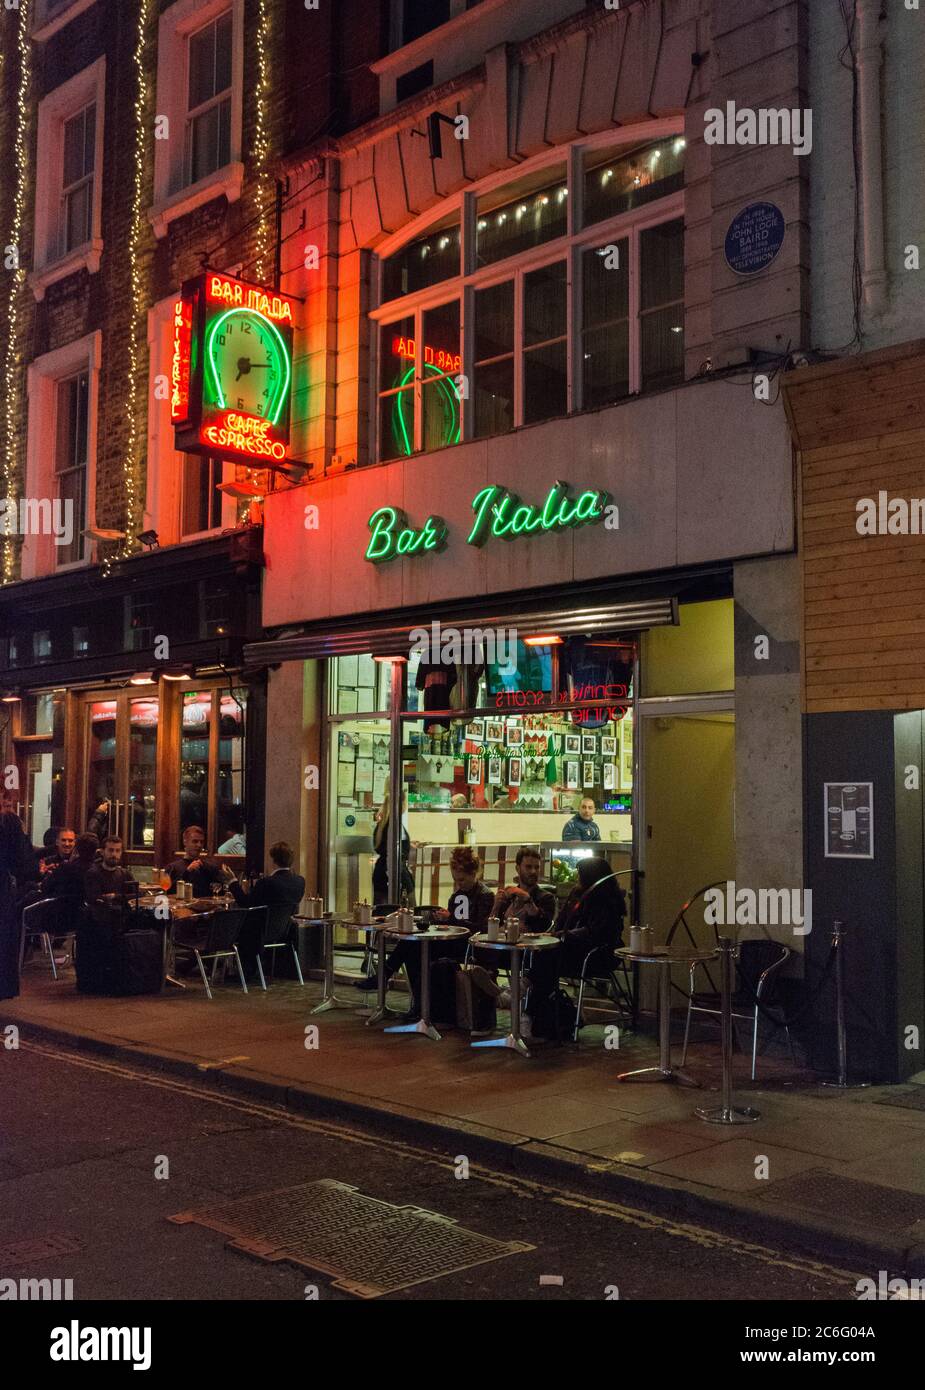 Bar Italia, Frith Street, Soho London. Traditional and famous Italian coffee shop sign and cafe Stock Photo